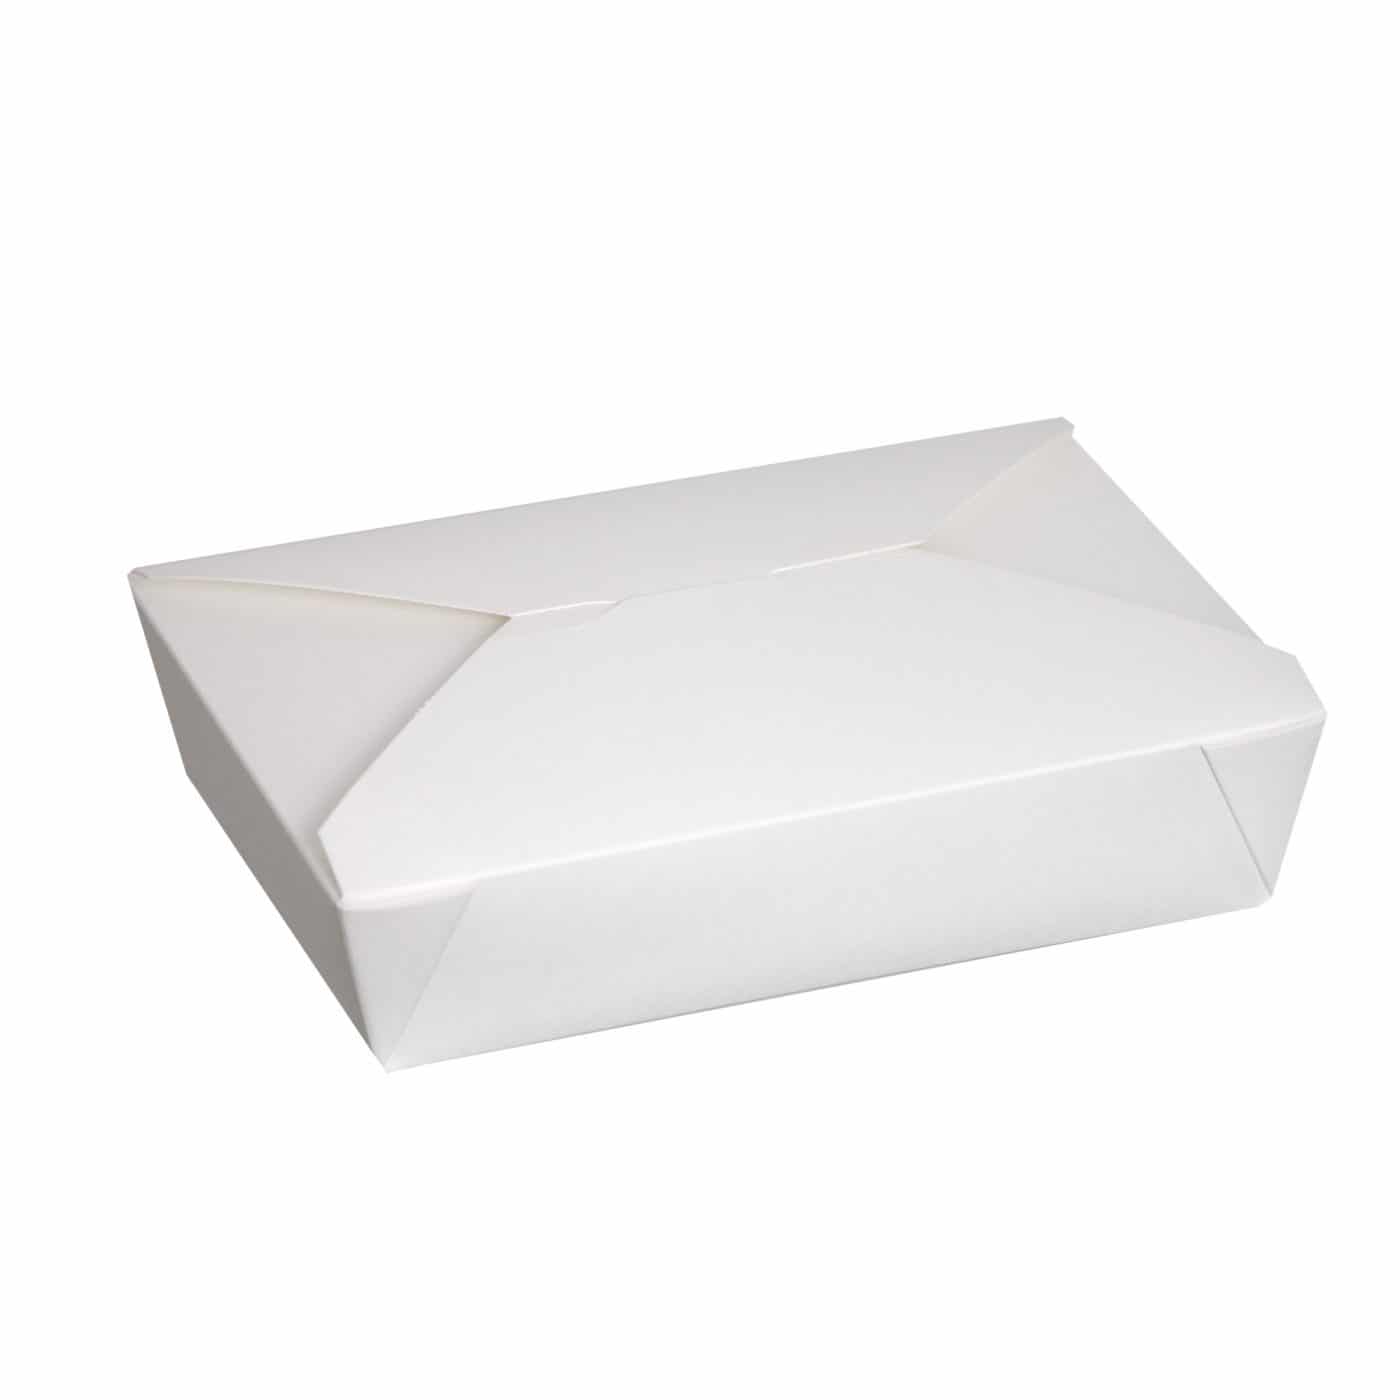 Carton alimentaire blanc étanche (code 2, AM070) - 51oz/1449ml, paquet de 250